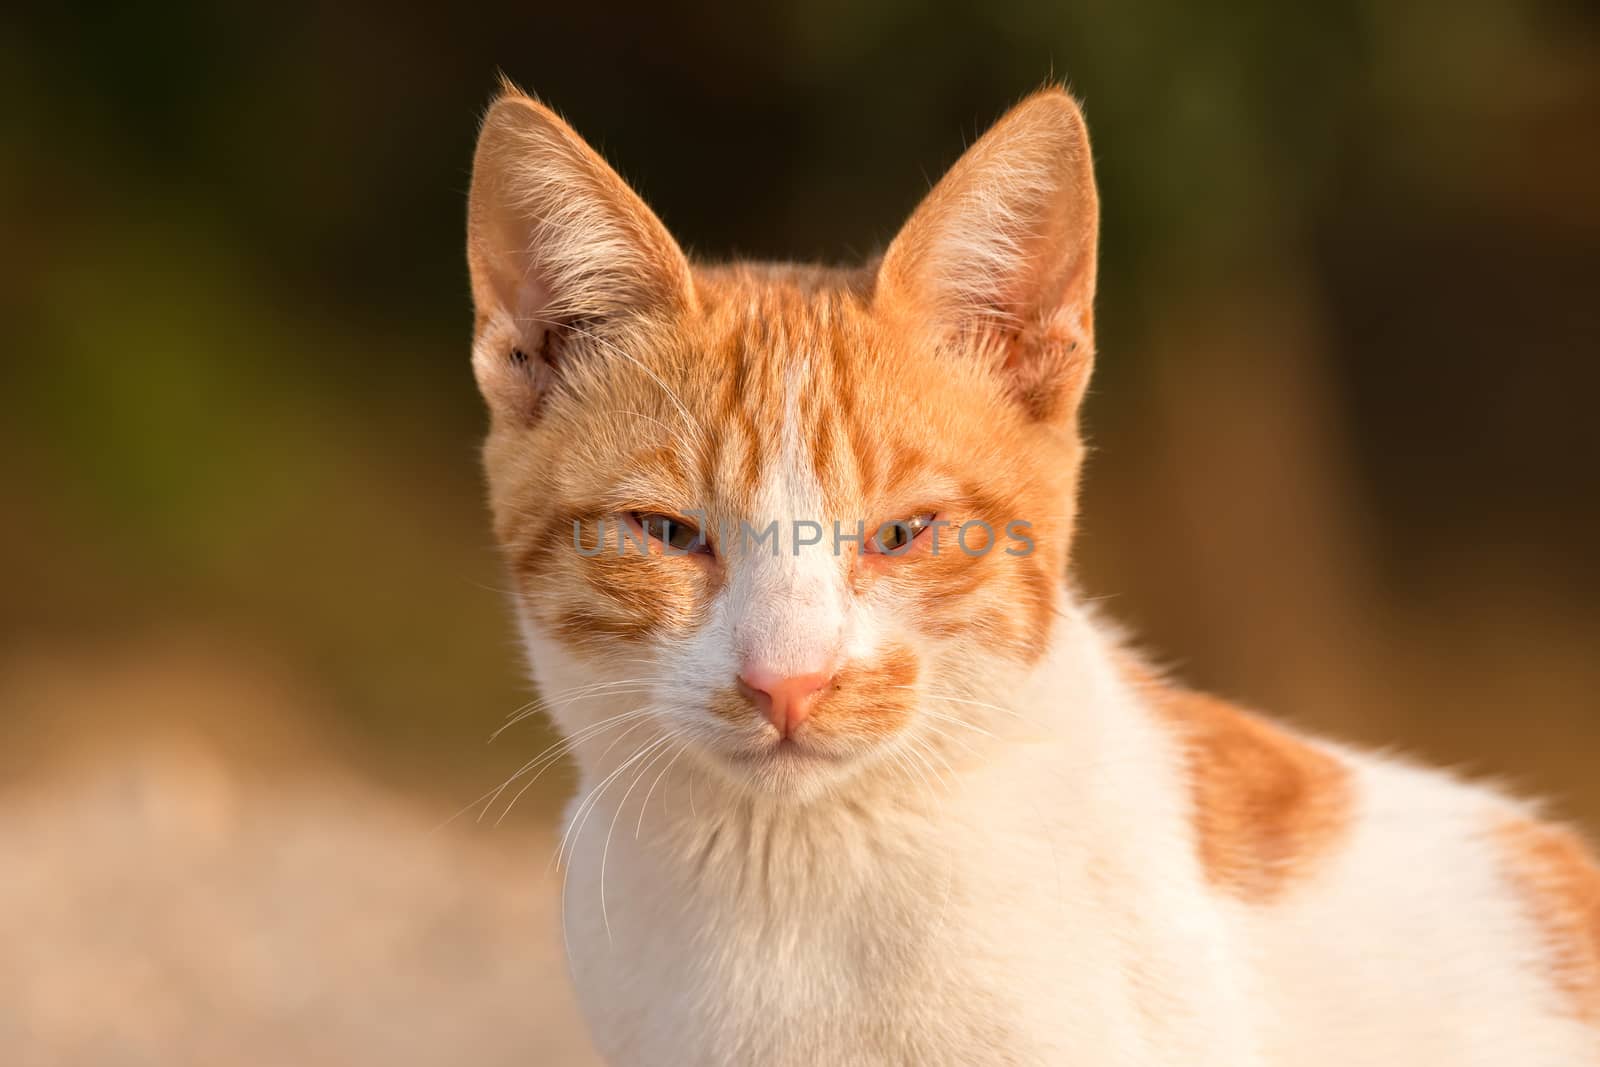 Red cat portrait